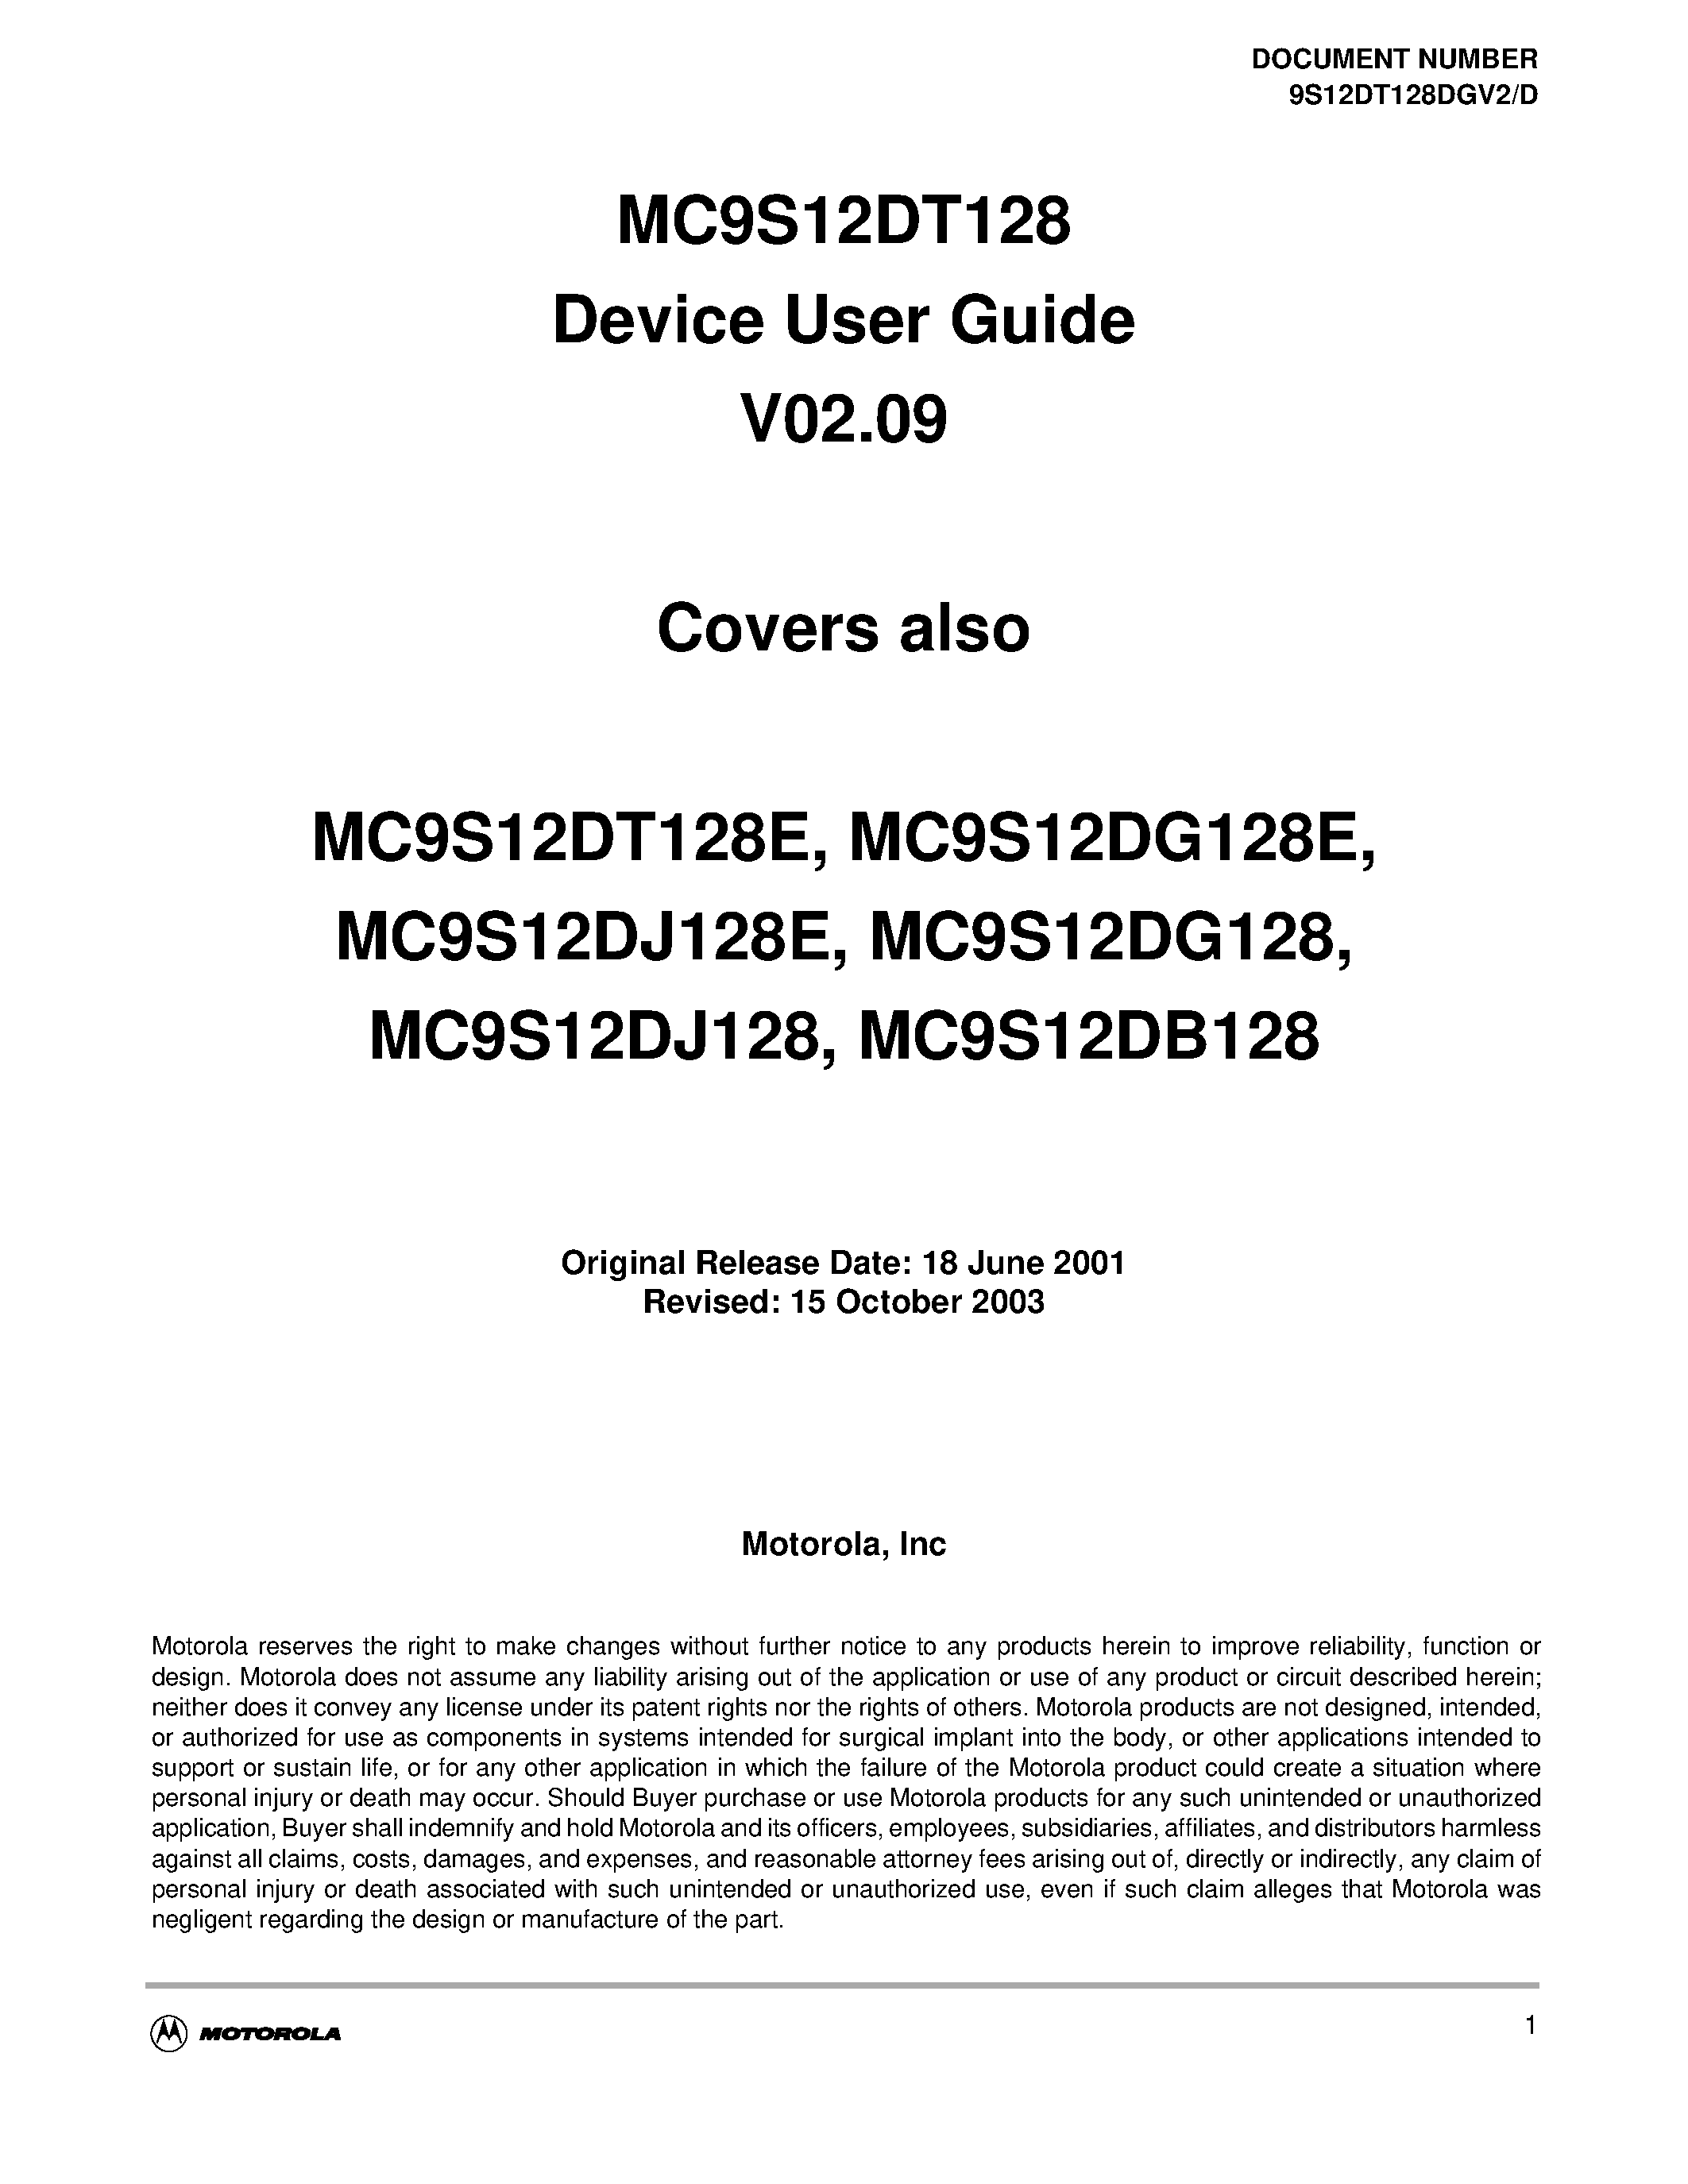 Datasheet S12VREGV1 - MC9S12DT128 Device User Guide V02.09 page 1